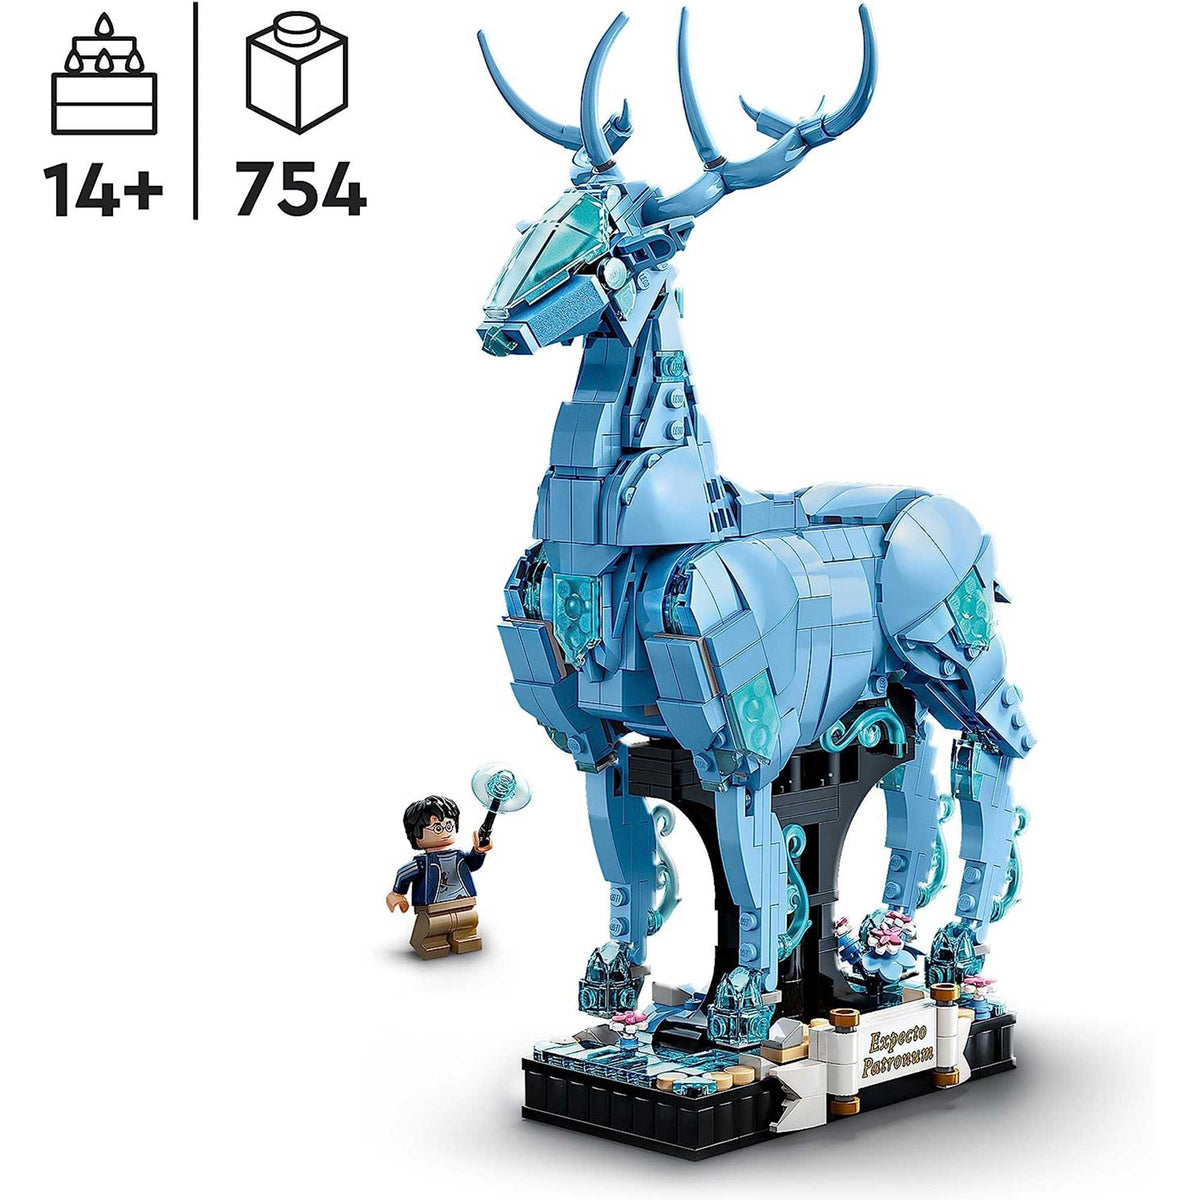 LEGO Harry Potter 76414 Expecto Patronum 2-in-1 Figures Set